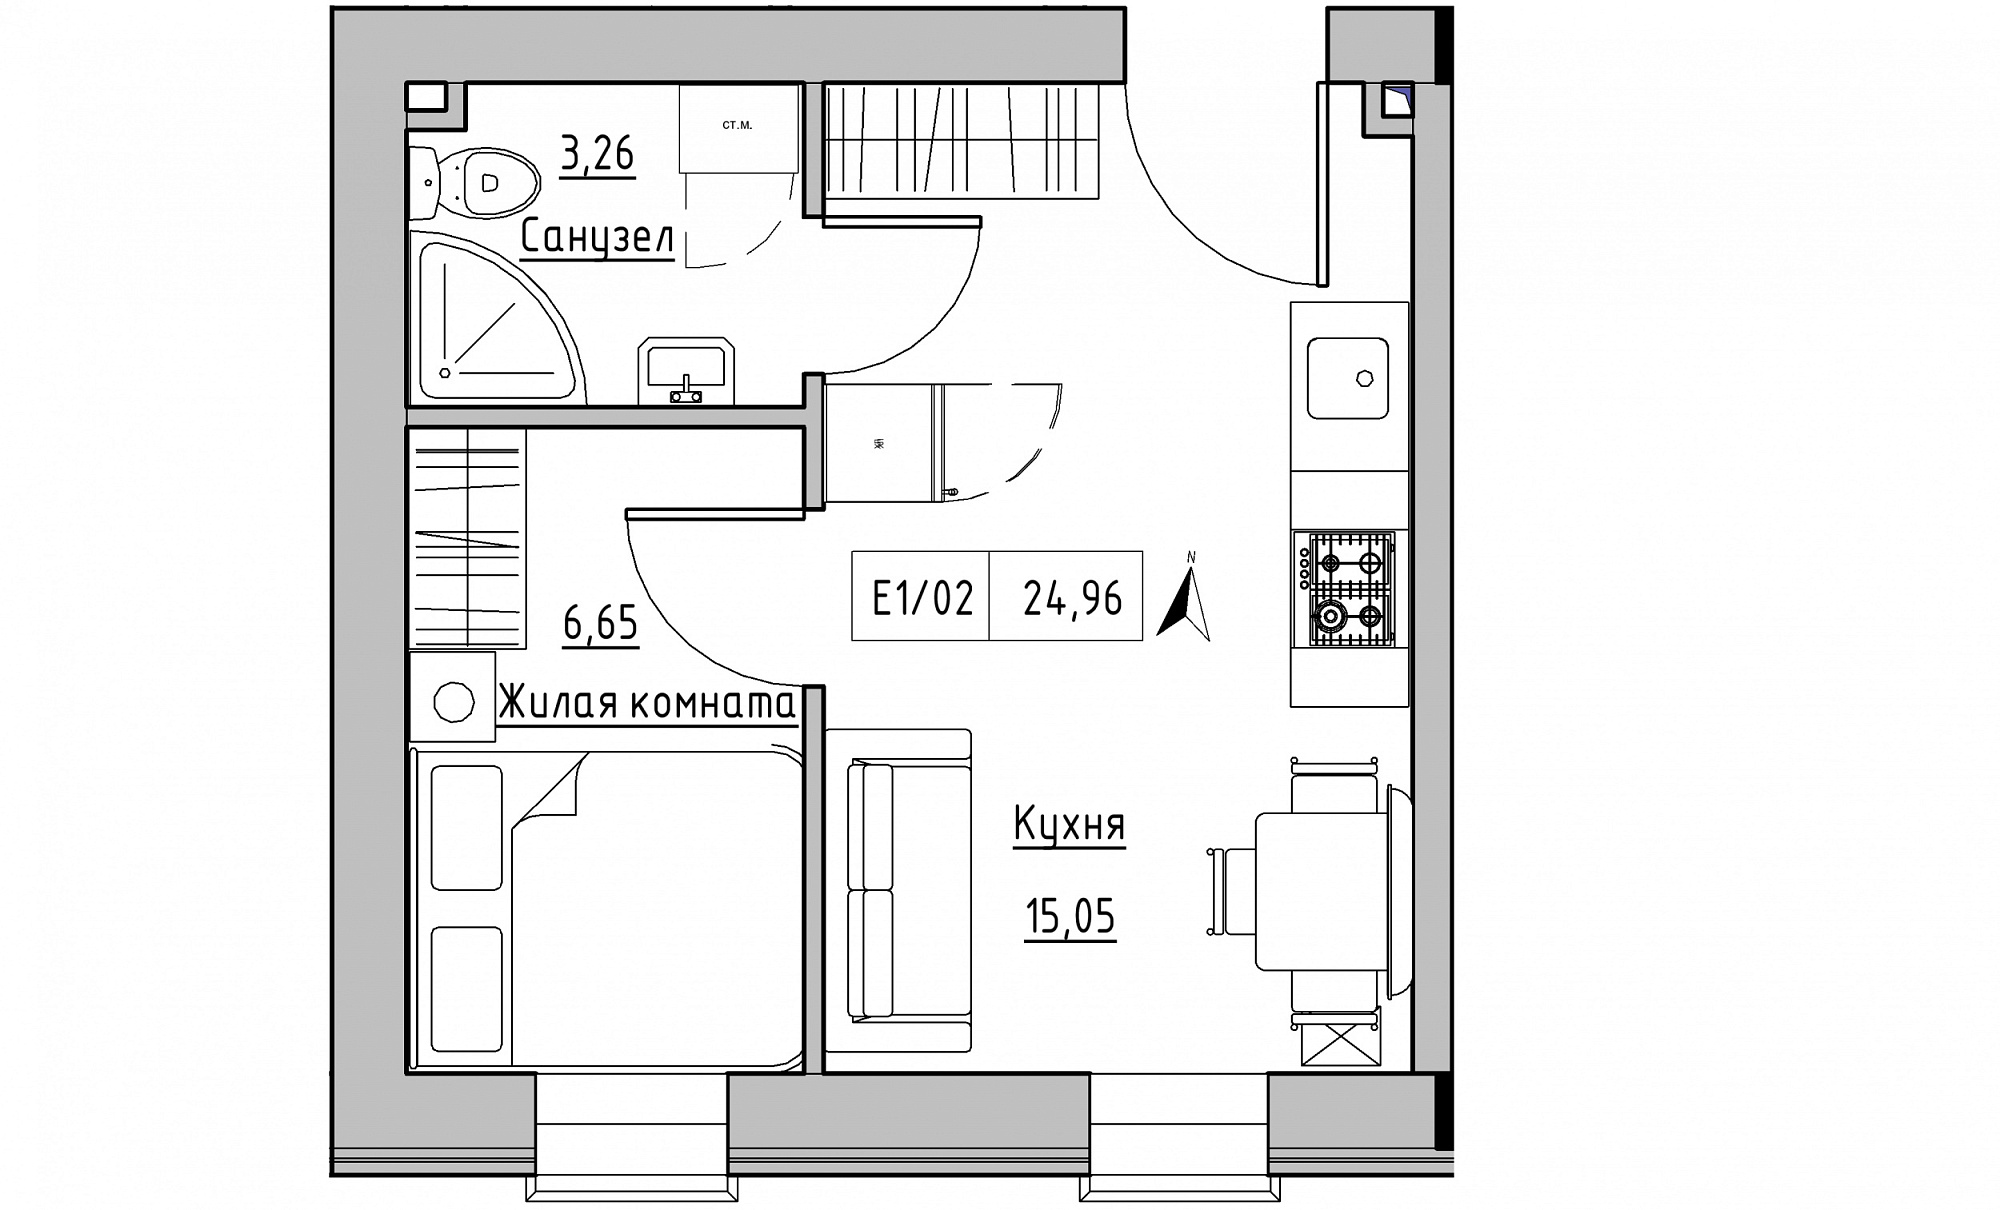 Planning 1-rm flats area 24.96m2, KS-015-05/0015.